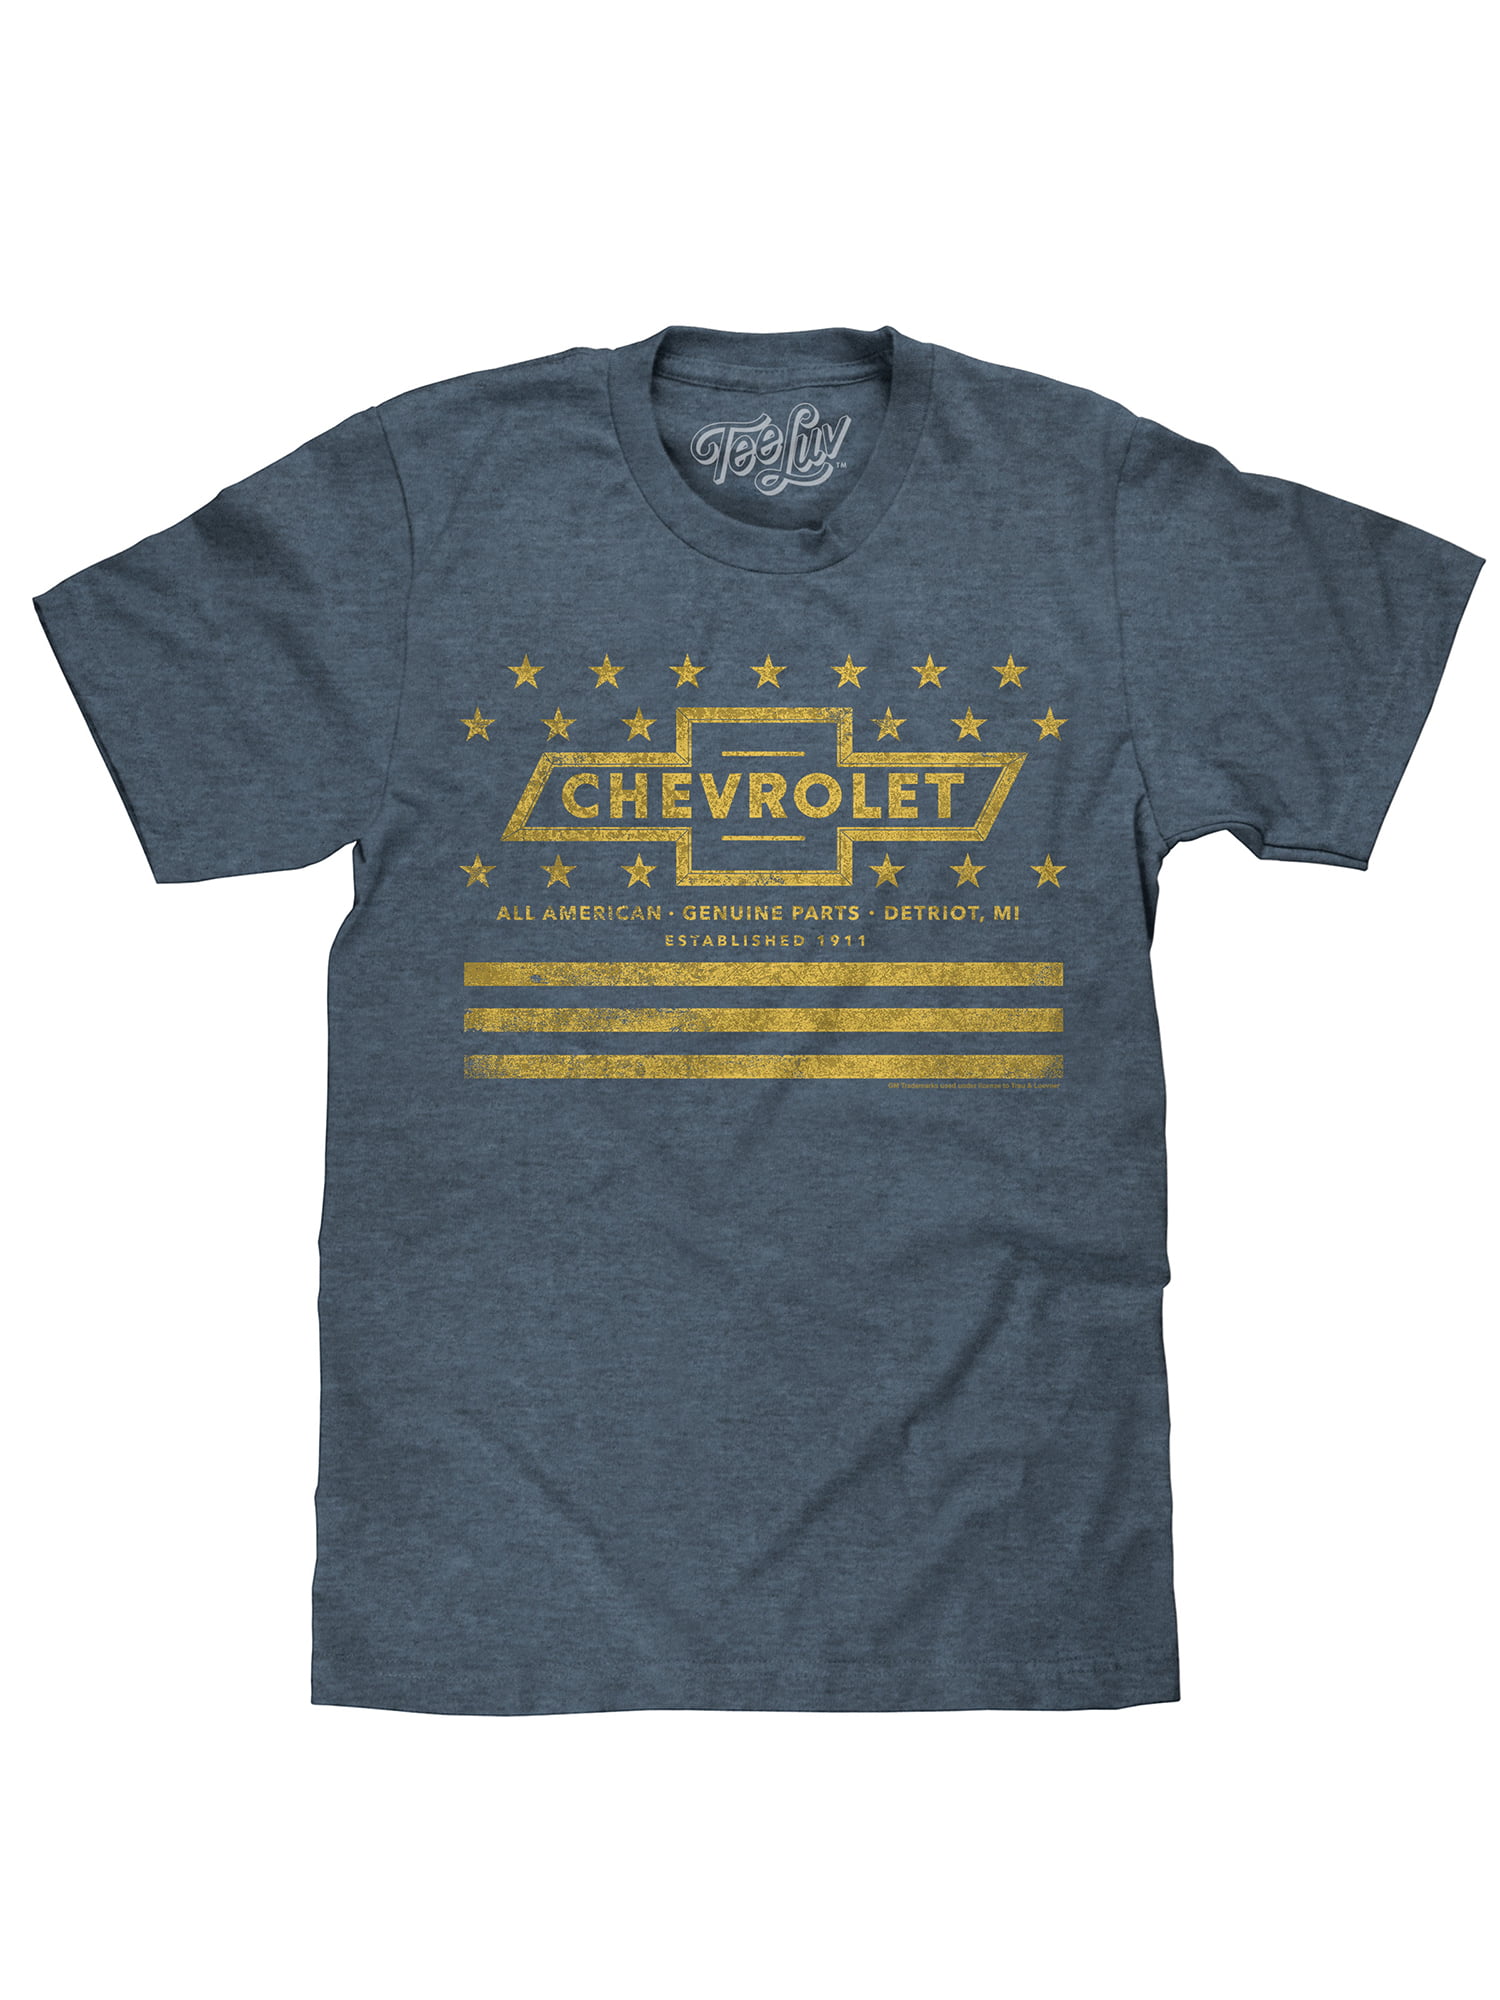 Tee Luv Chevrolet T-Shirt Yellow Stars and Stripes Chevy Shirt 